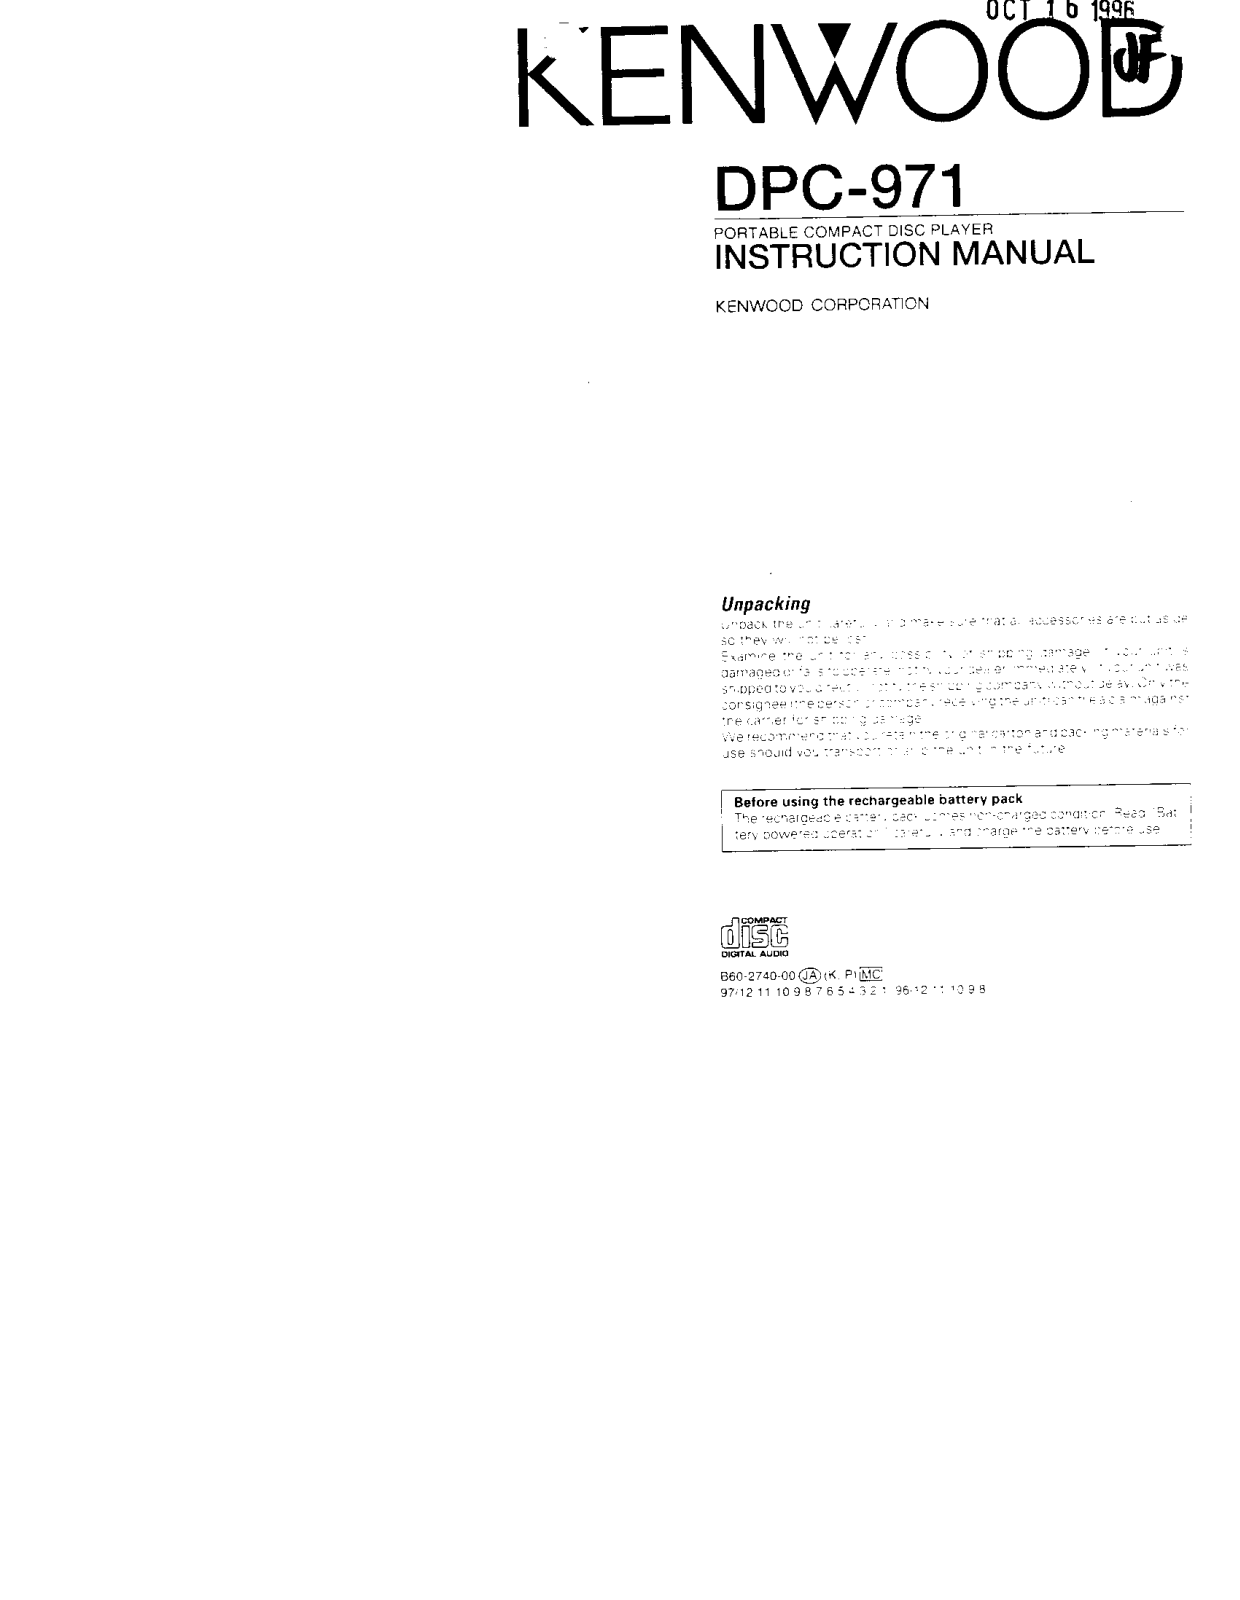 KENWOOD DPC-971 User Manual